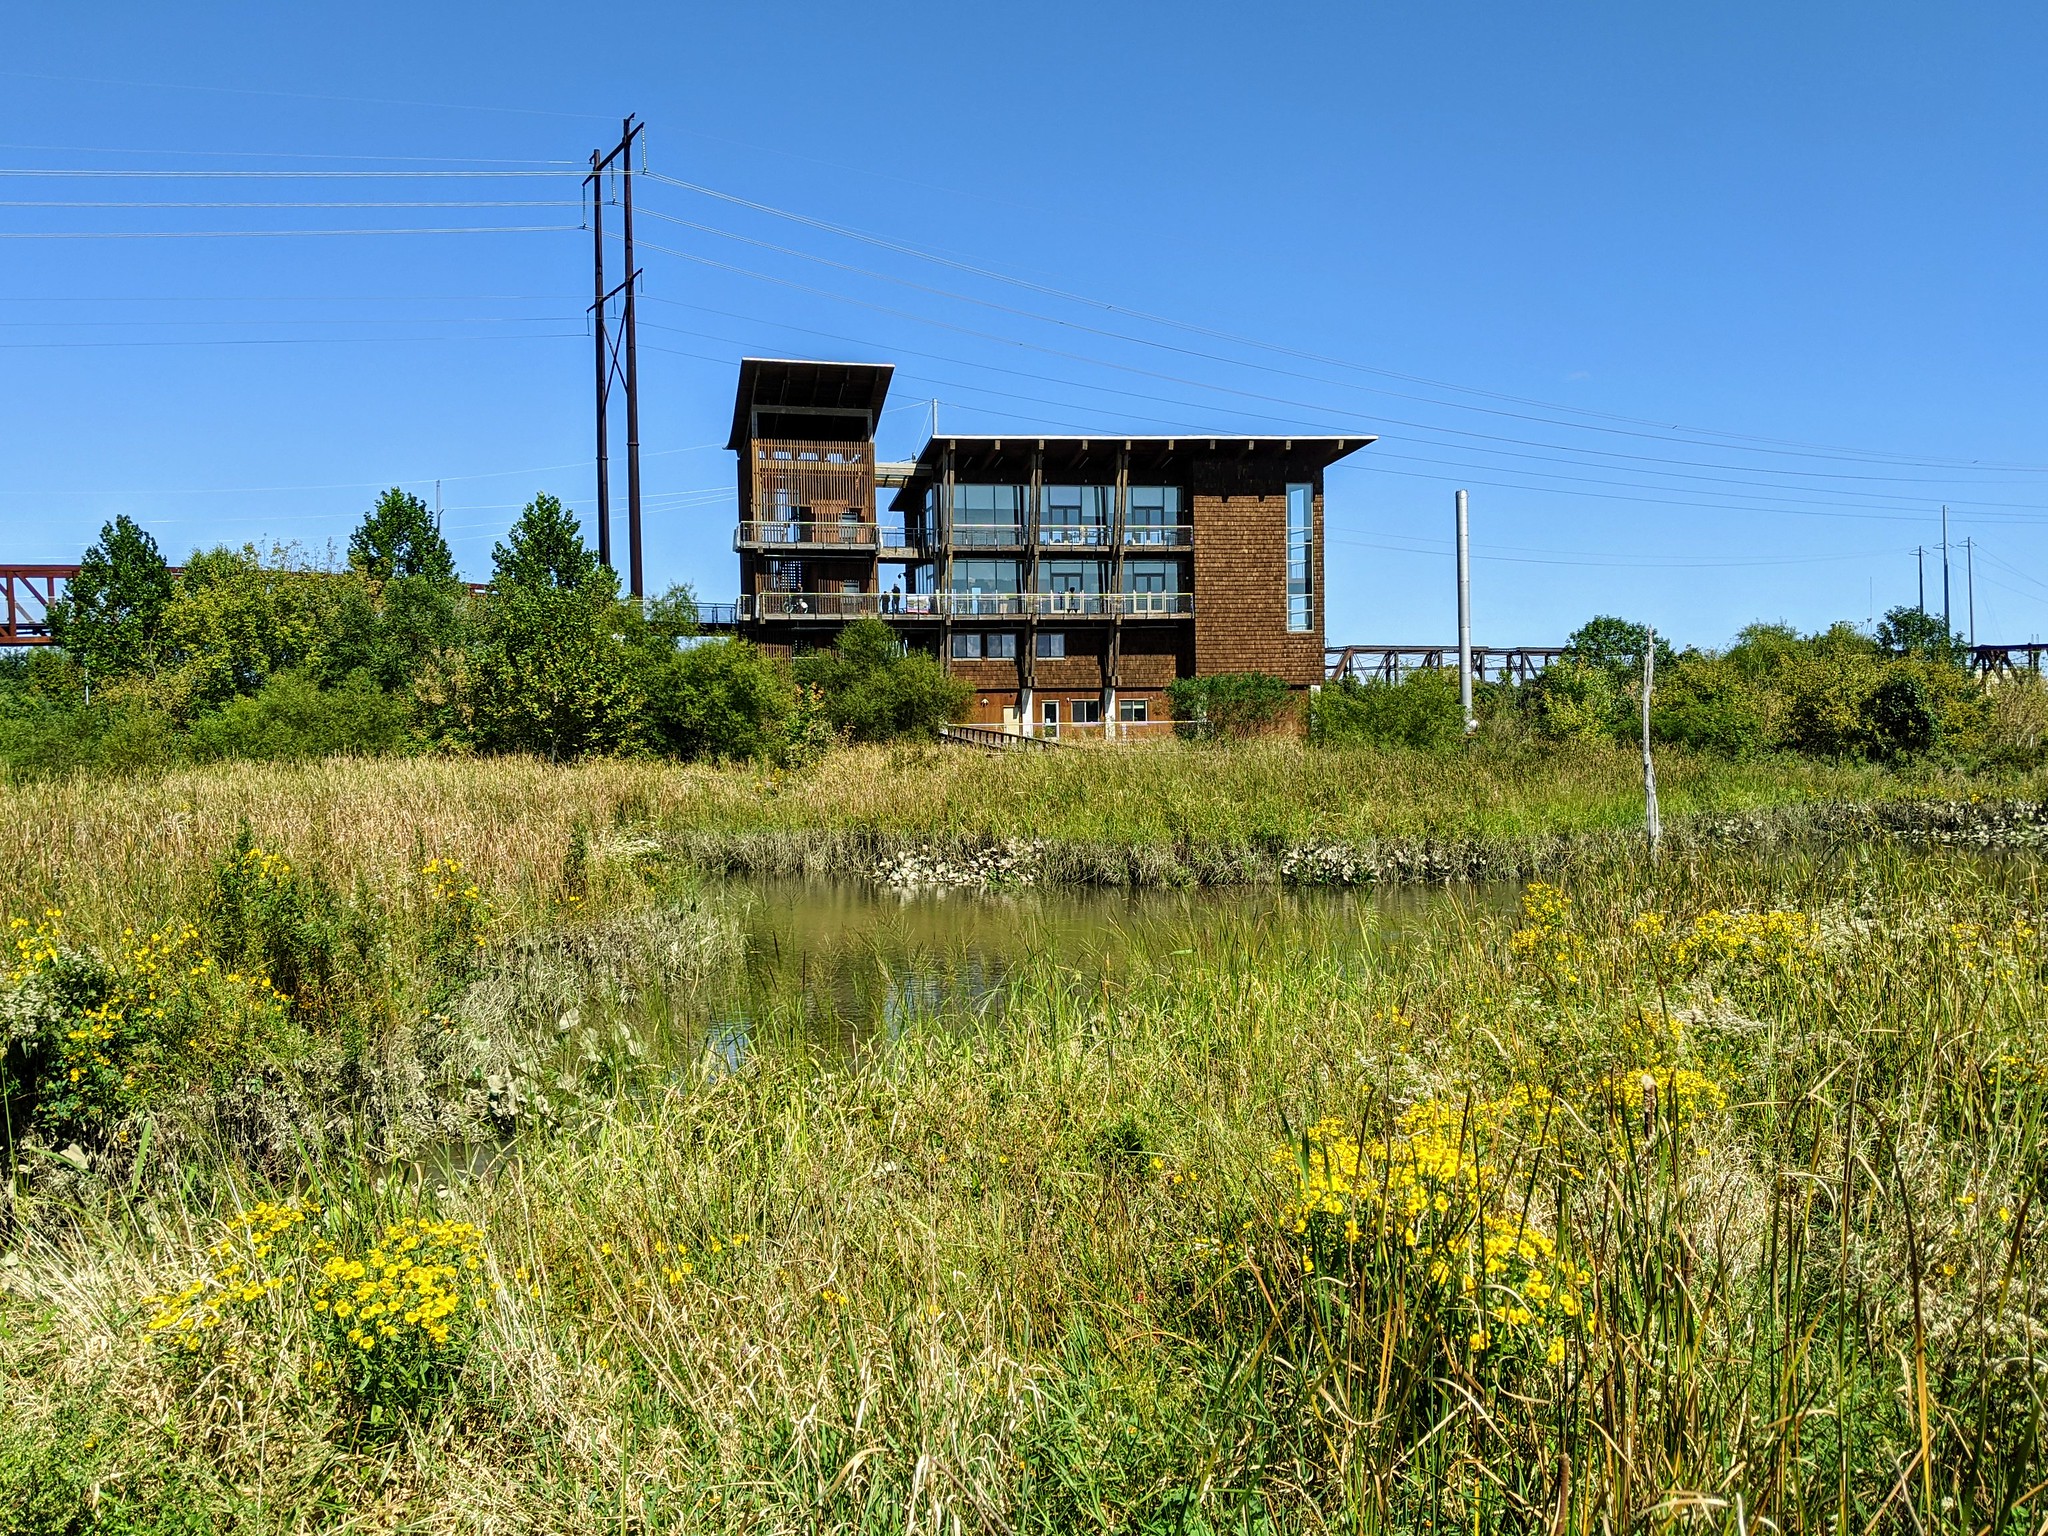 The DuPont Environmental Education Center